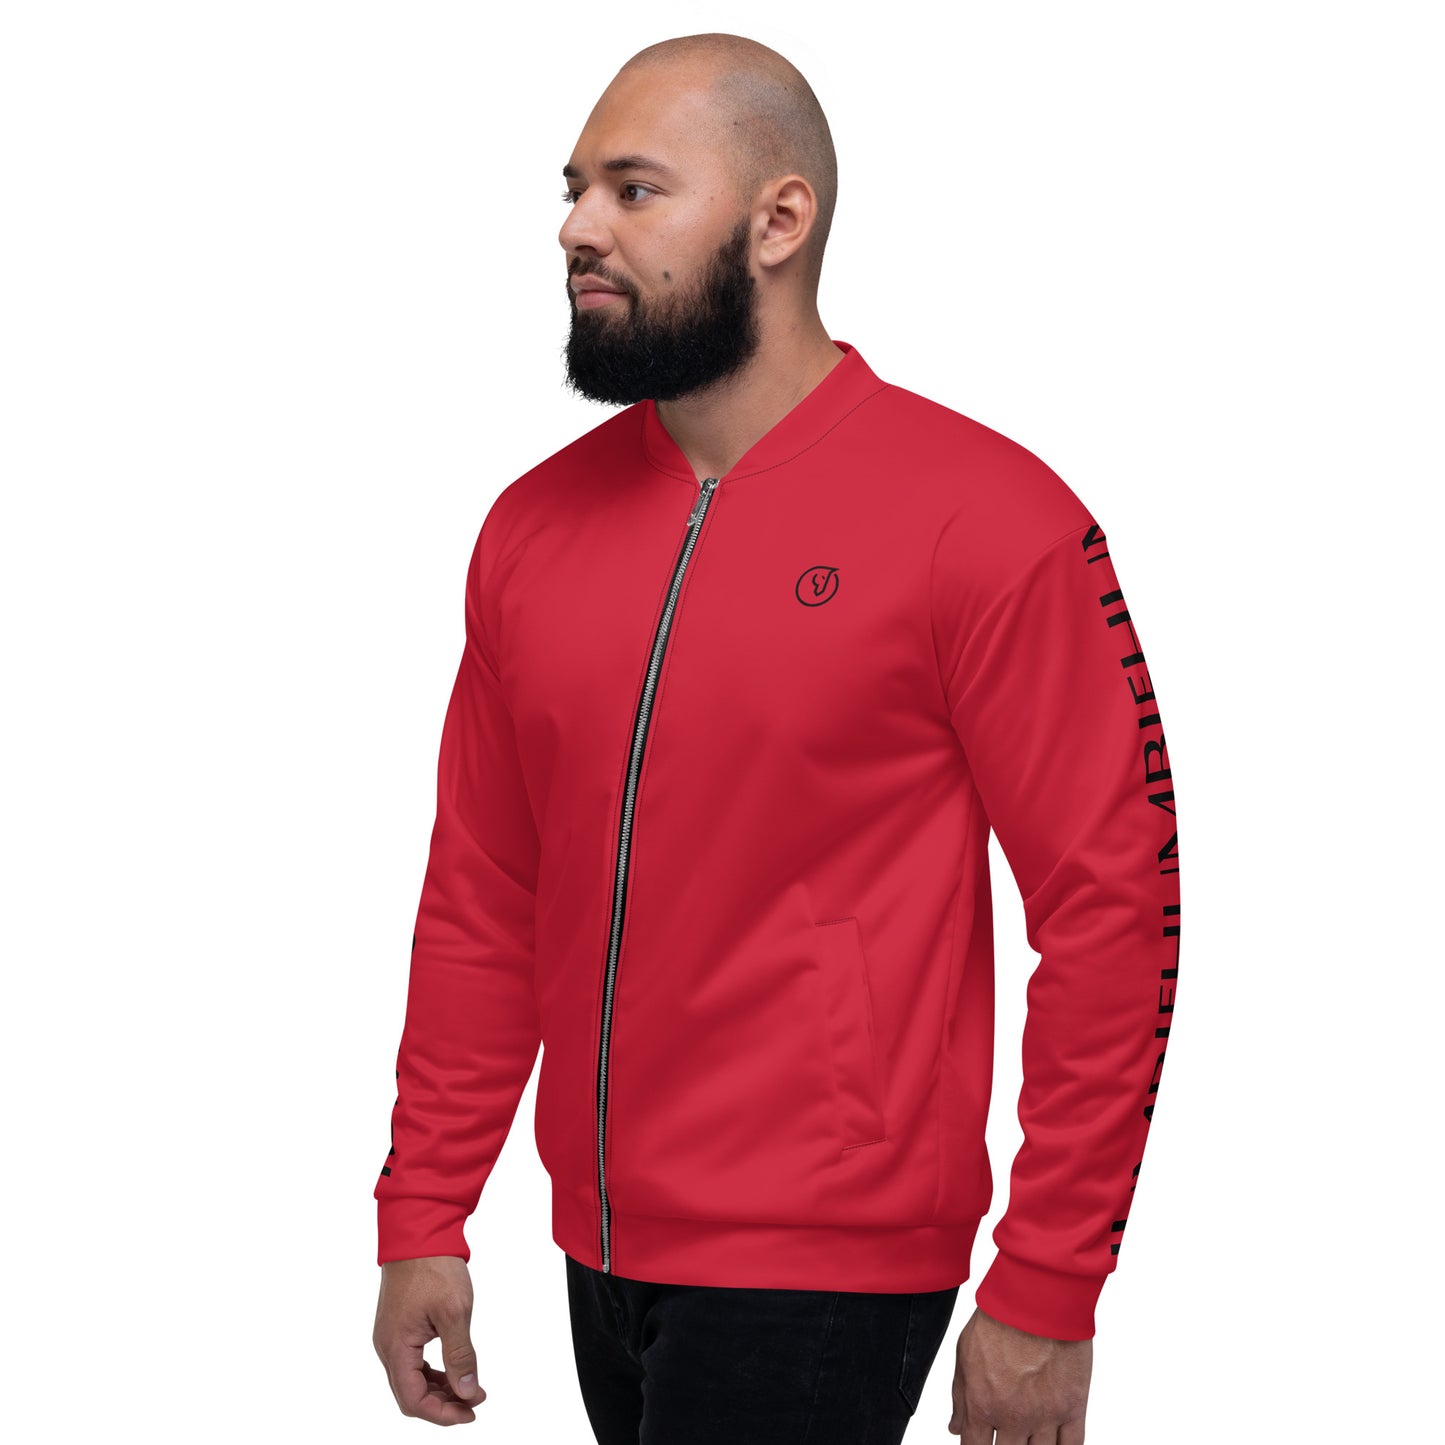 Humble Sportswear, men’s bomber jackets, red bomber jackets, men’s casual jackets, men’s workout jackets, men’s outerwear jackets